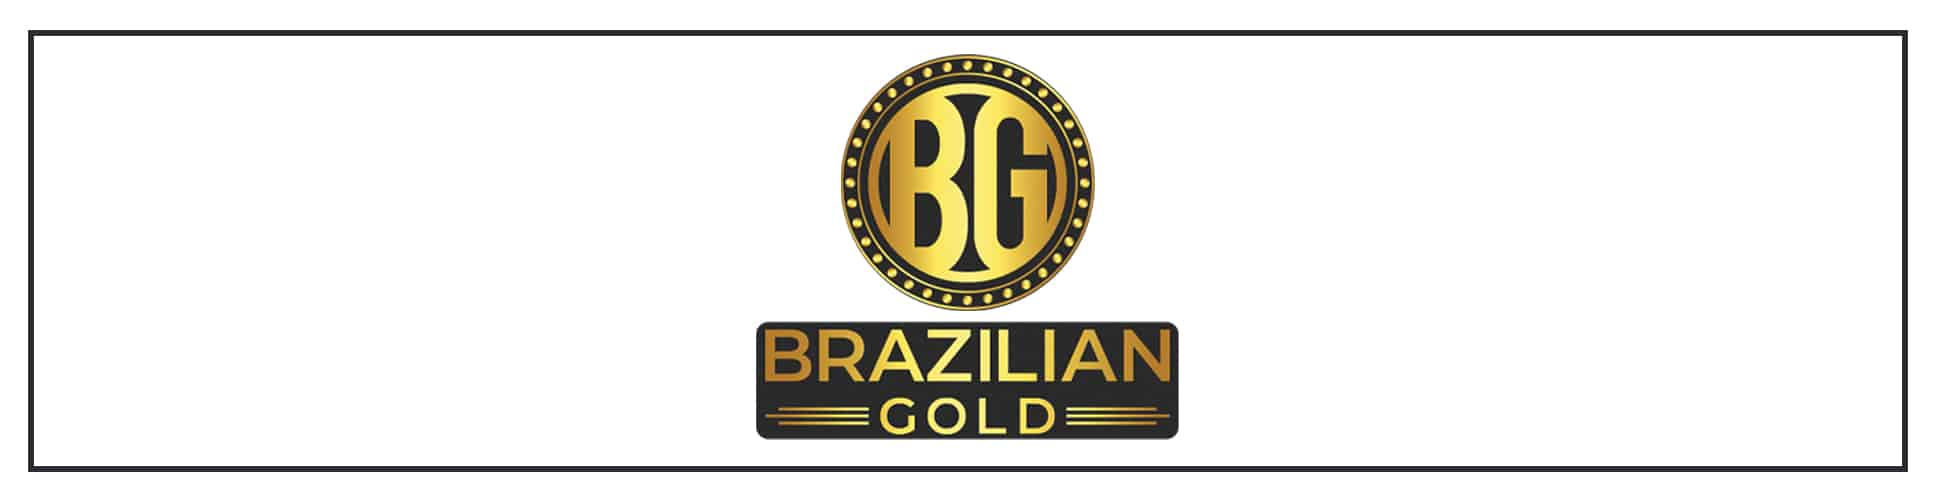 Brazilian gold logo on a white background.